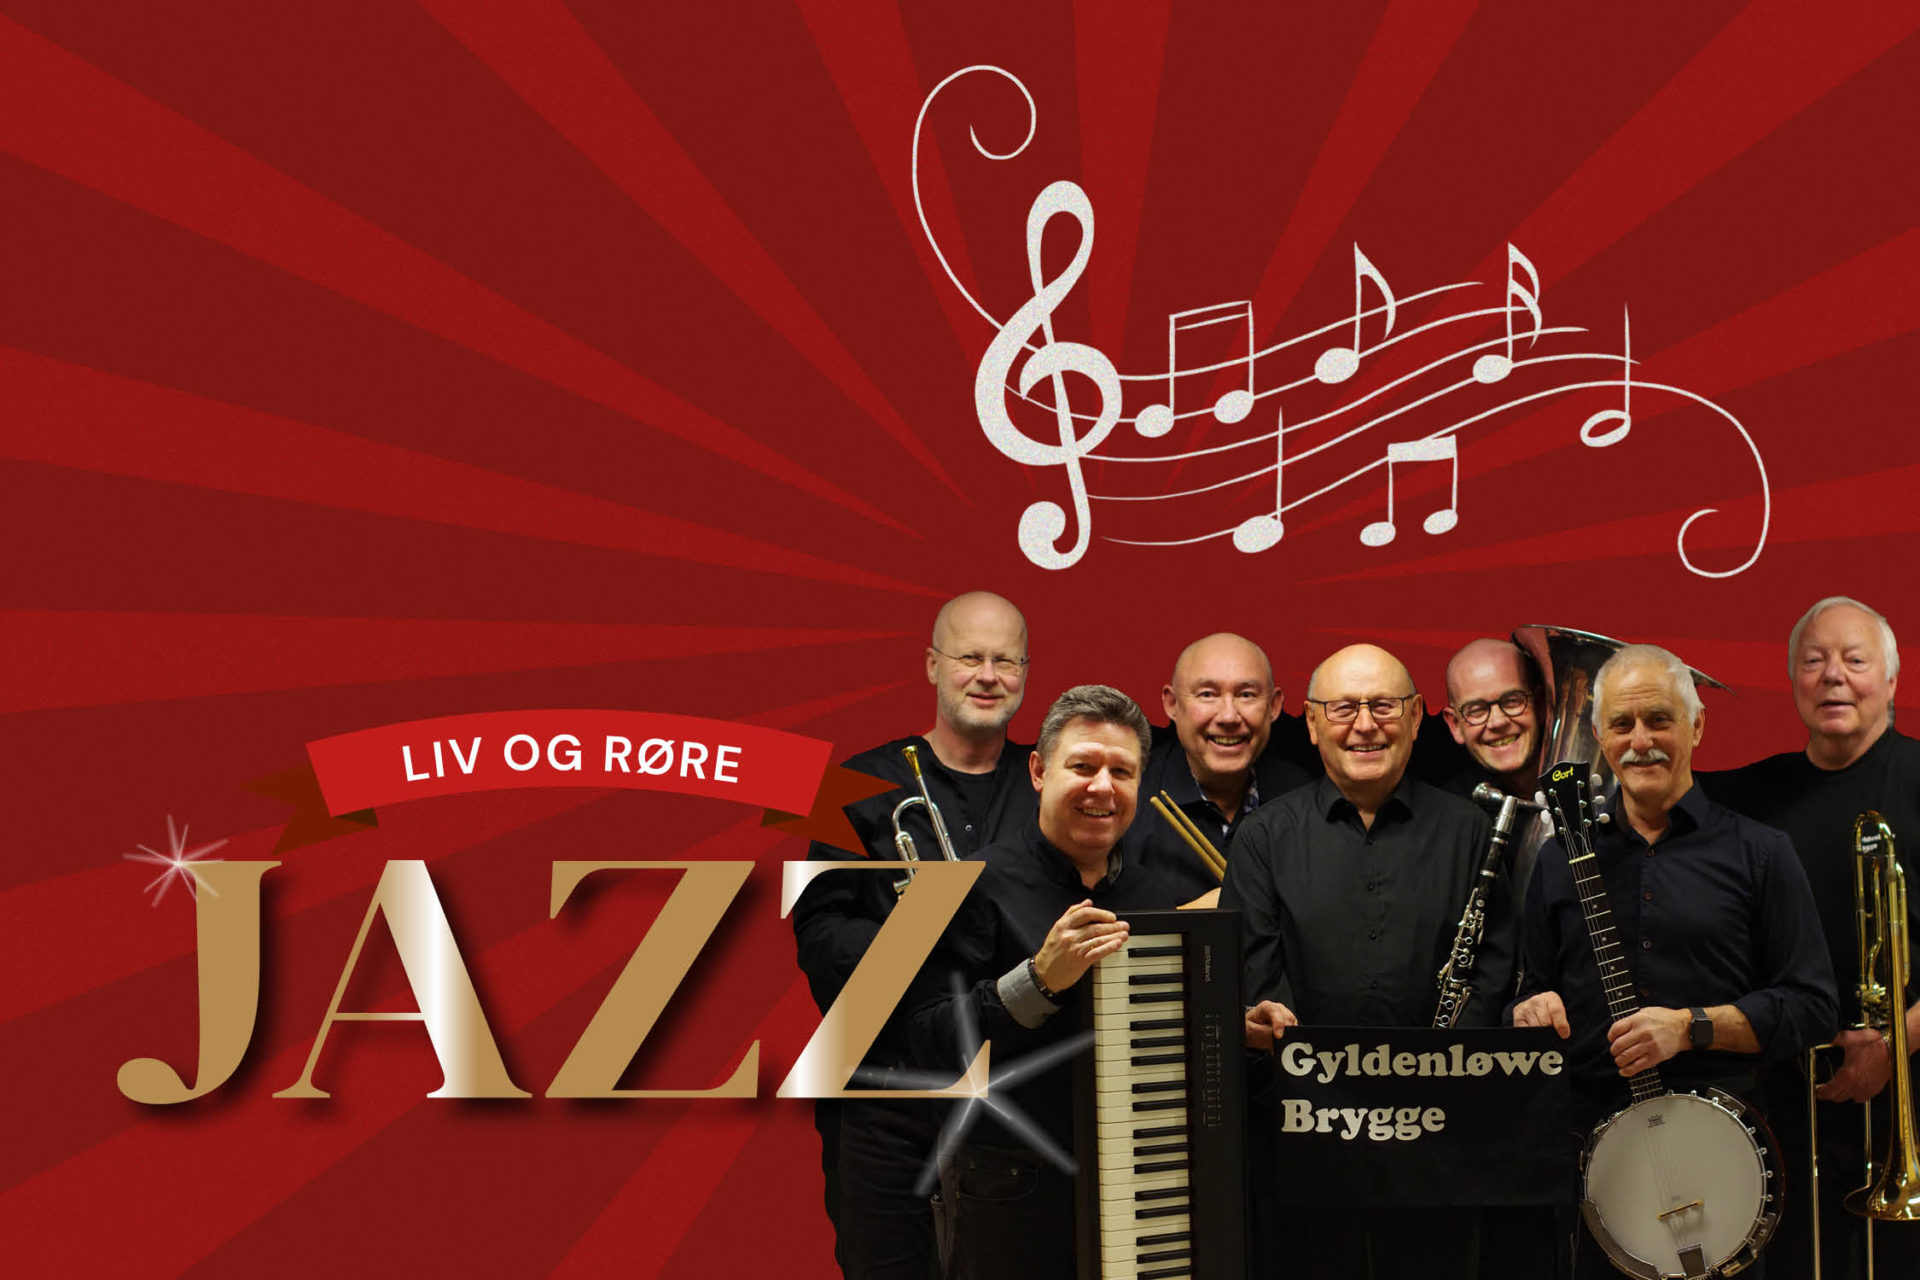 jazz med Gyldenløwe Brygge